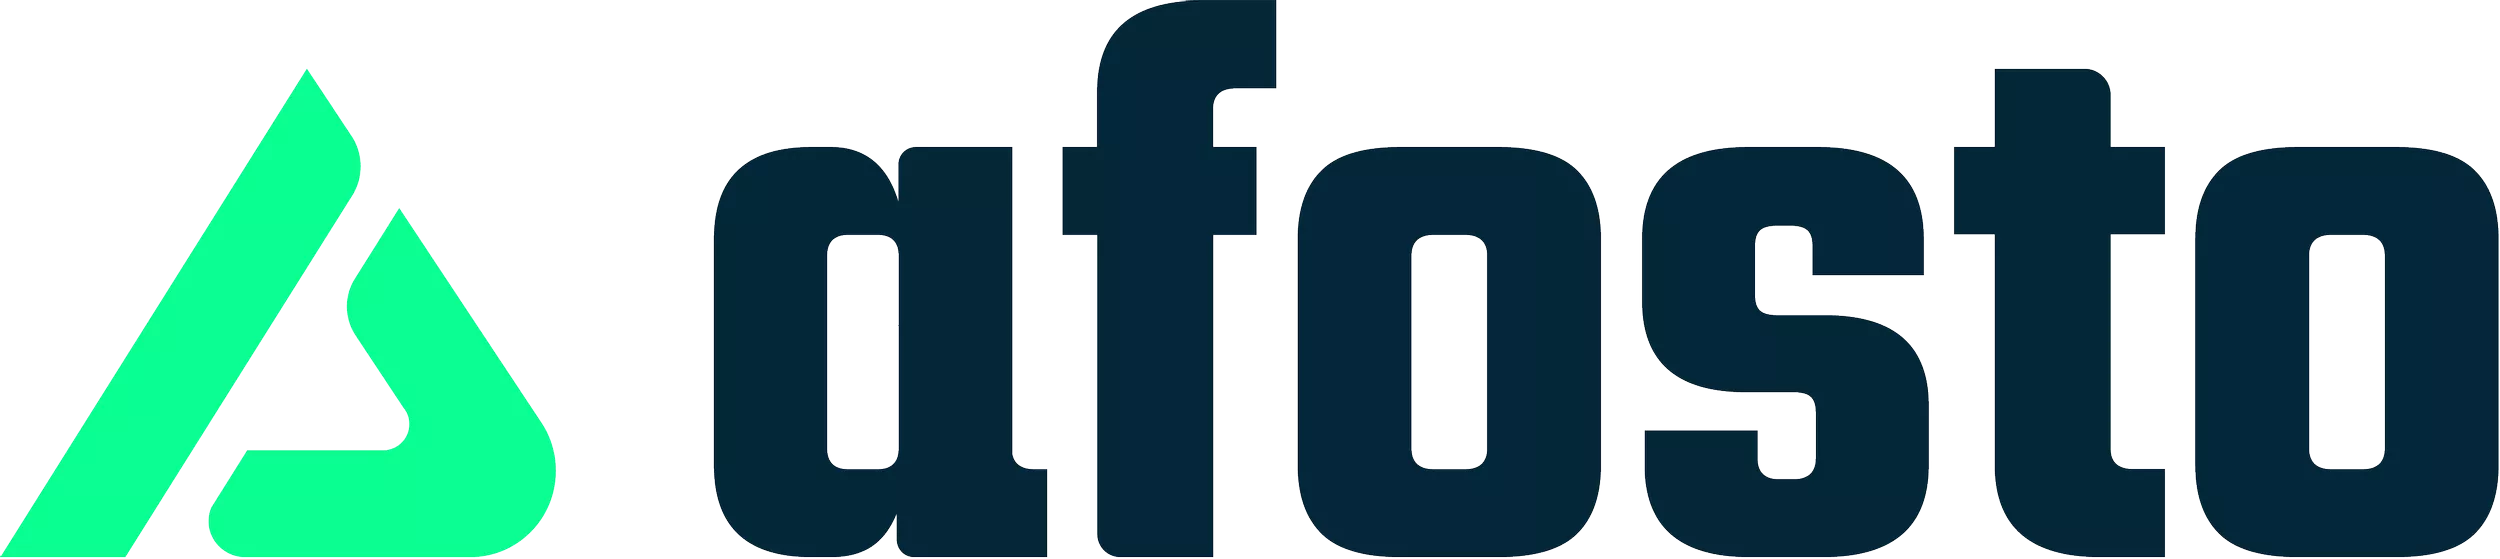 AFO-Logo-compleet-kleur-RGBat4x